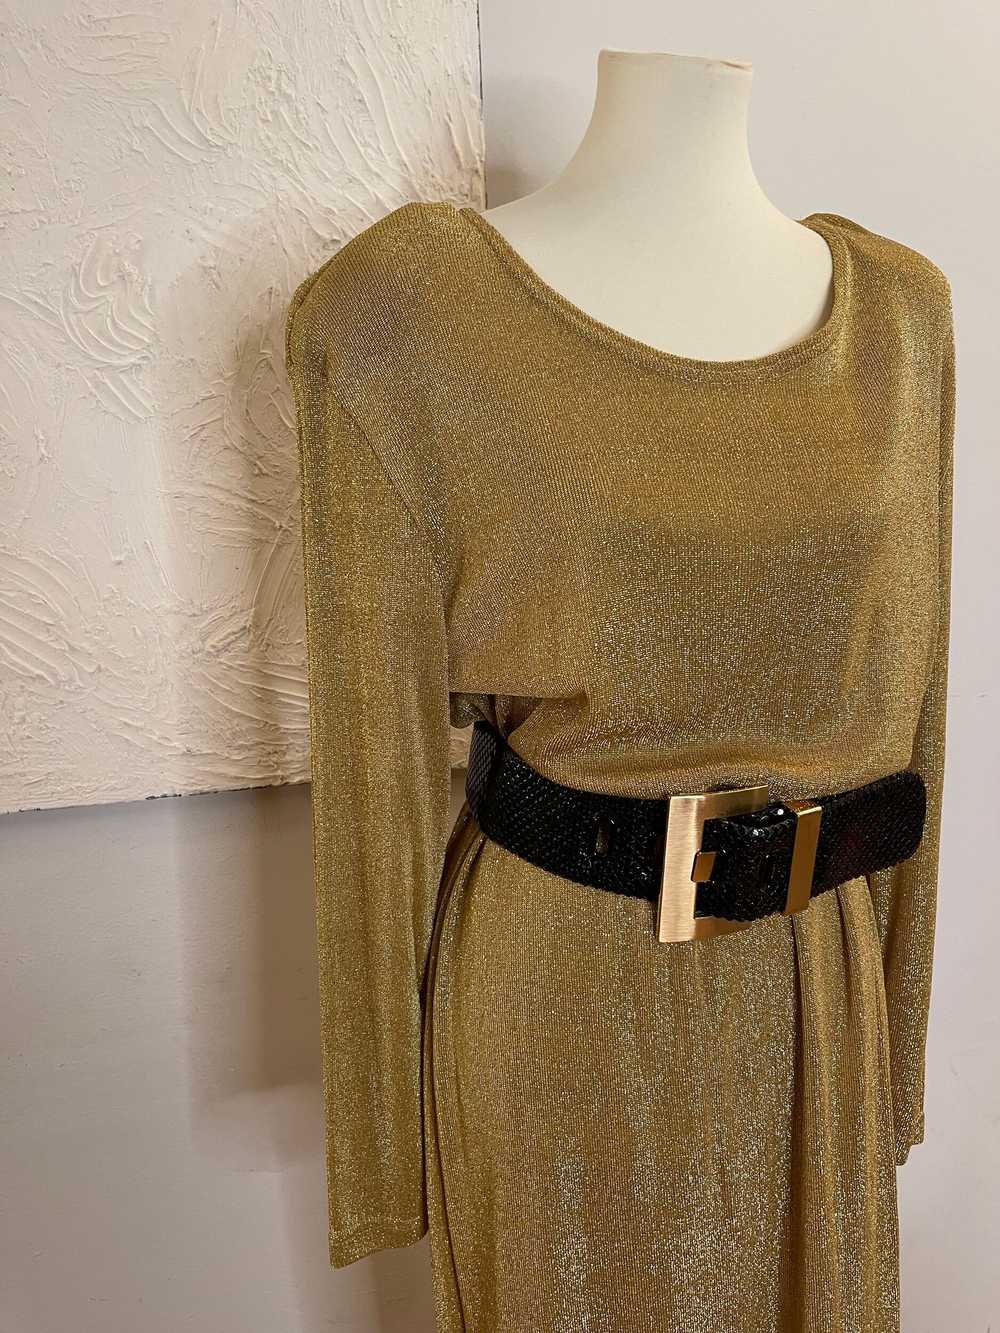 80s gold metallic knit dress - image 3